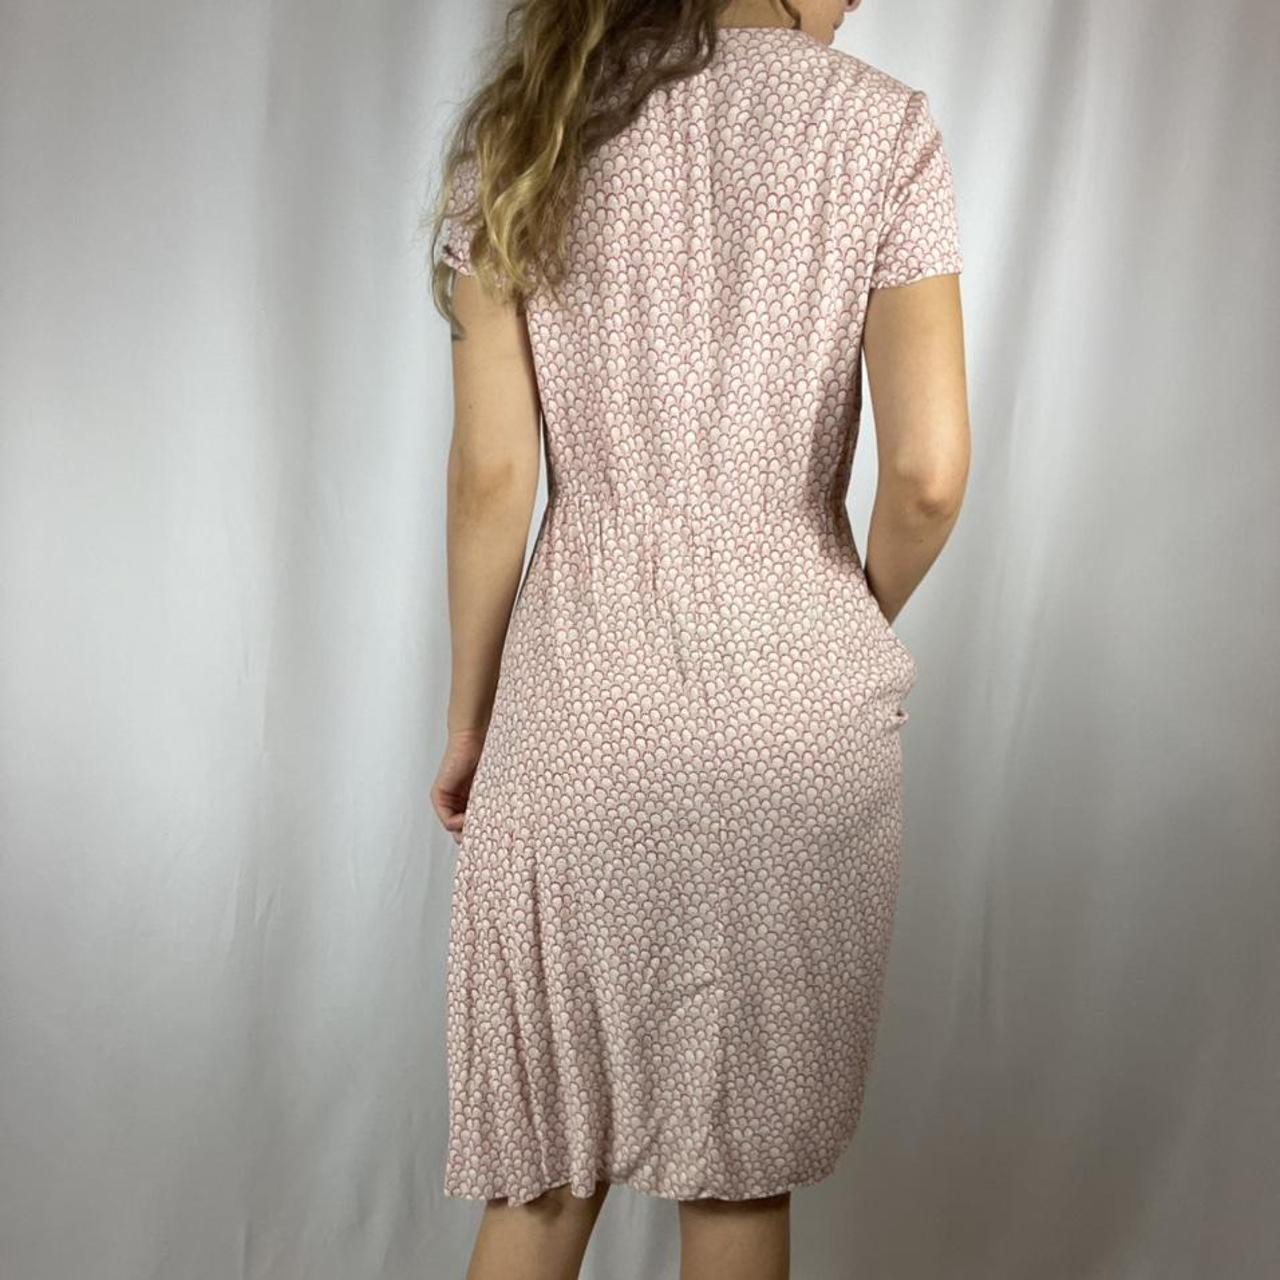 Product Image 3 - Vintage looking sheath dress 
-